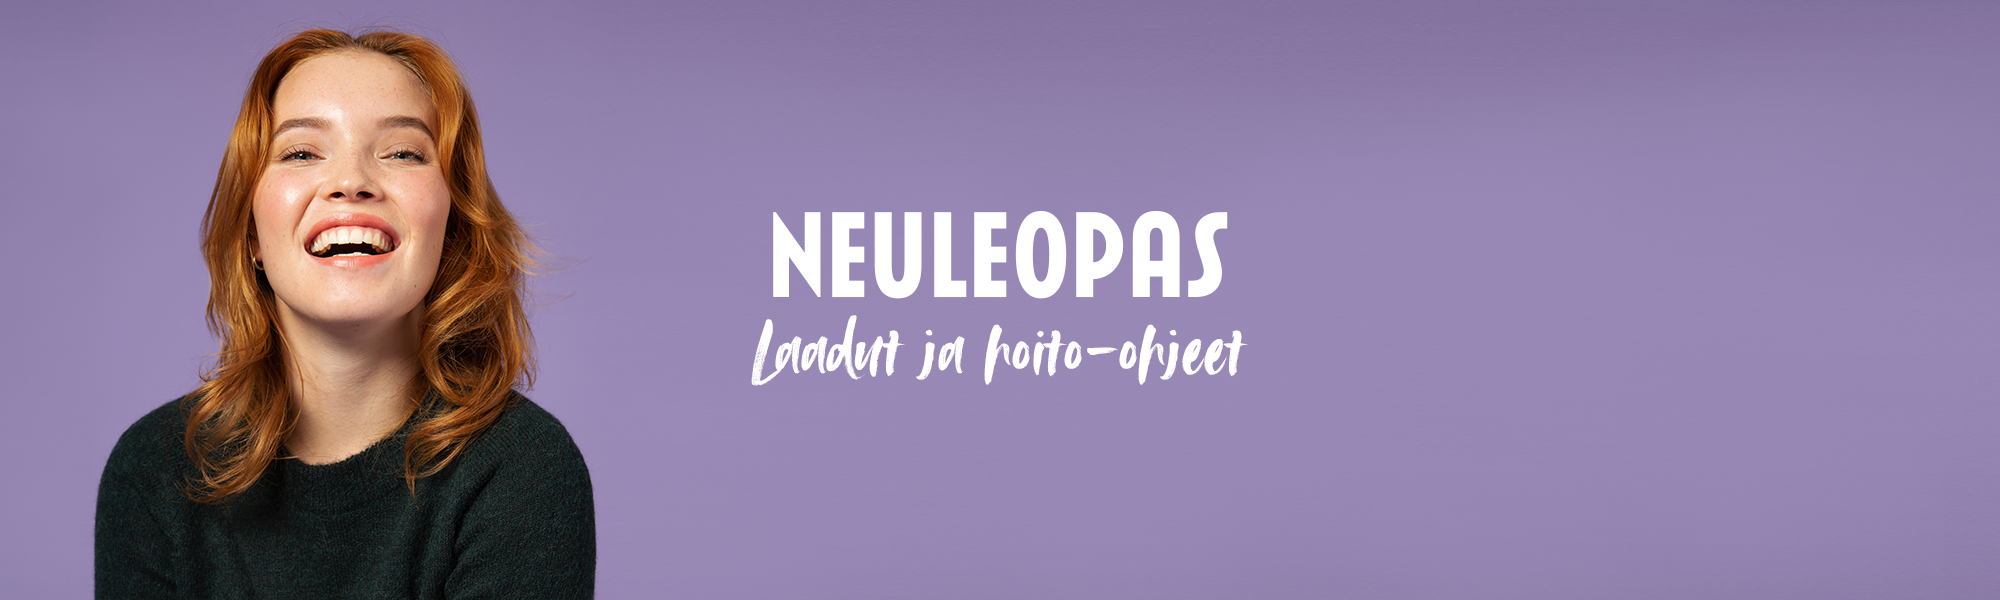 Neuleopas hero fullwidth